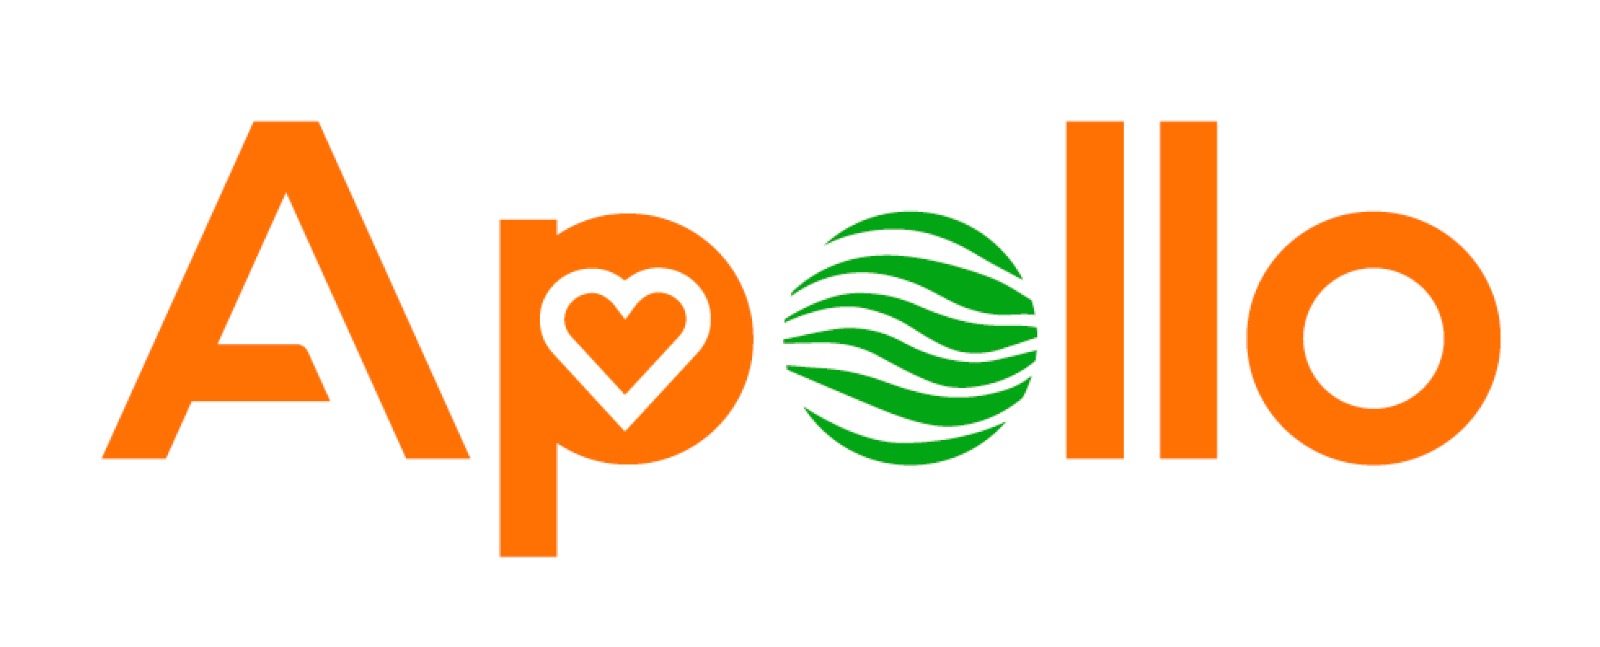 Apollo Healthcare Resources company logo